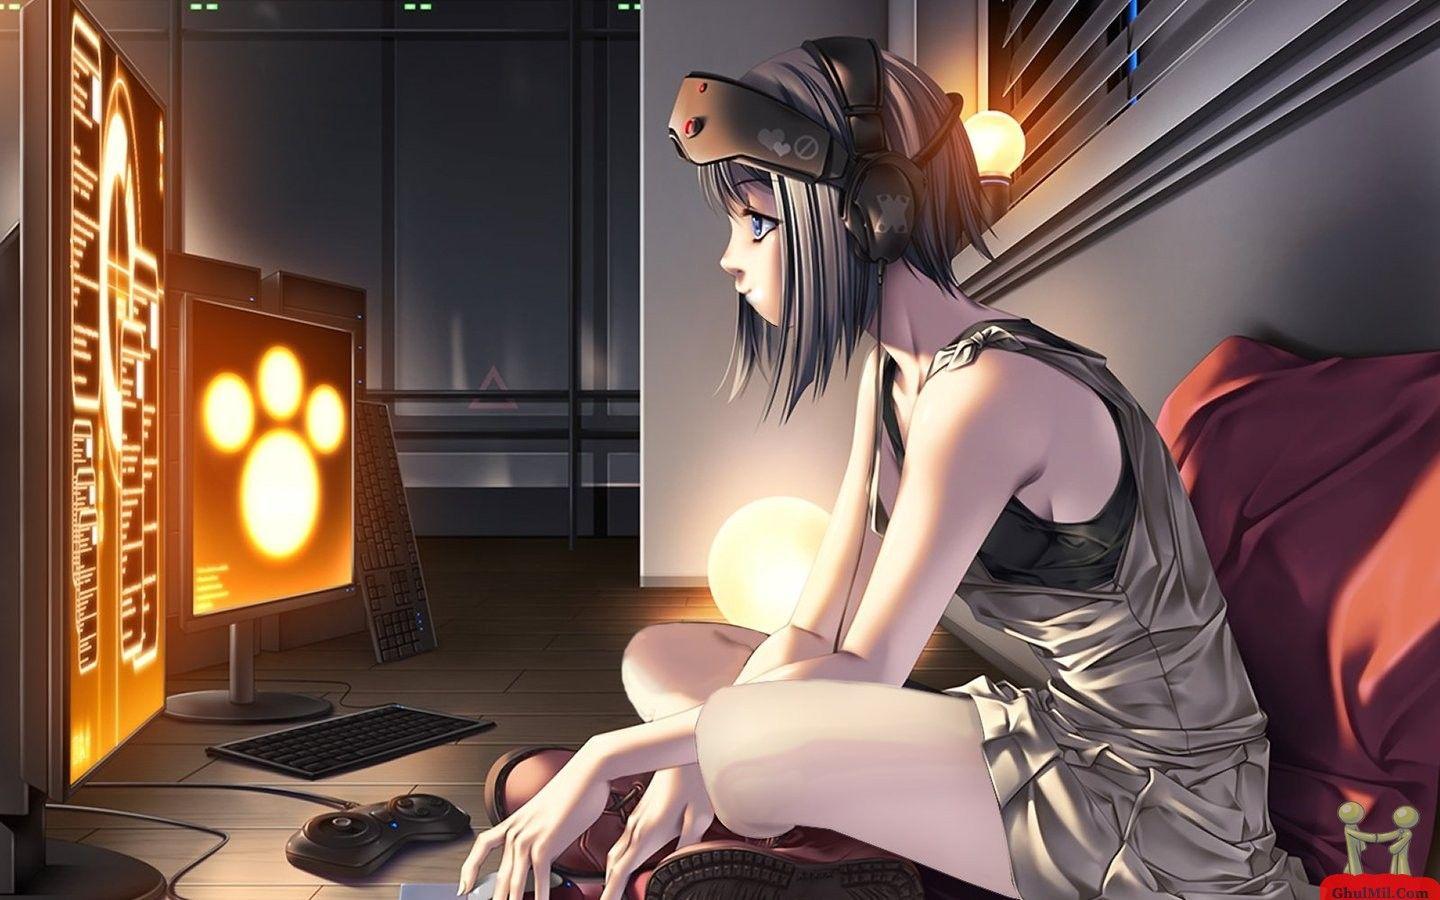 dry-sheep836: Very cute, anime, gamer girl, holding a gamepad in hands,  long brown hair, gray hoodie